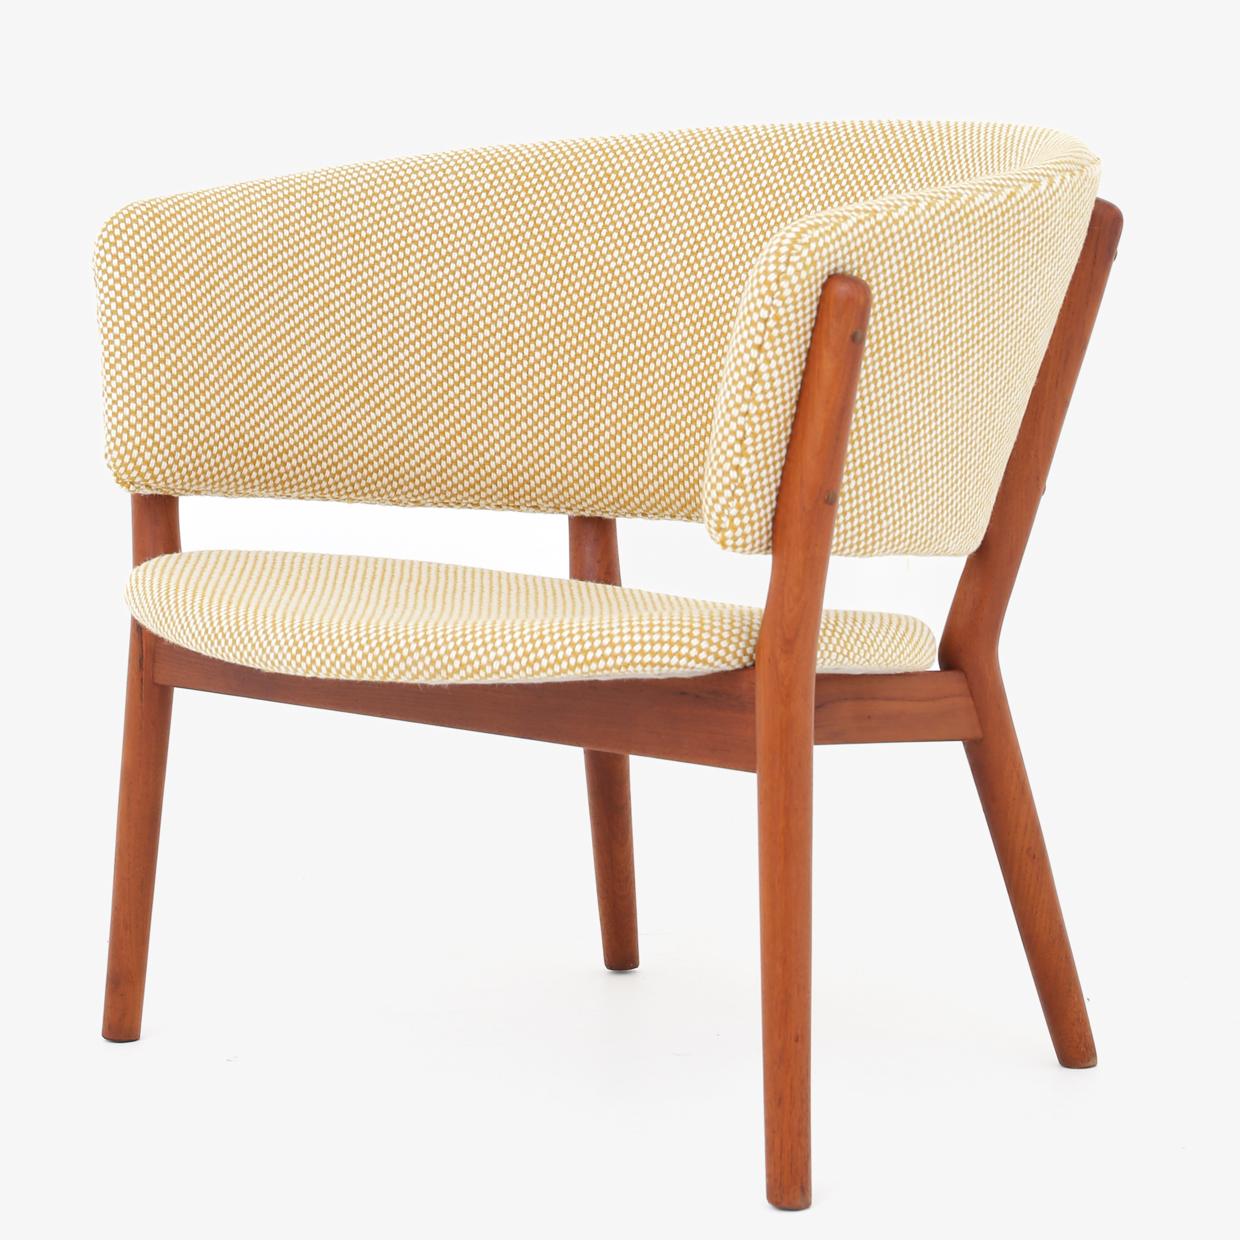 ND 83 - Pair of easy chairs in teak with new yellow textile (Sisu, colour 0405). Nanna Ditzel / Søren Willadsen.